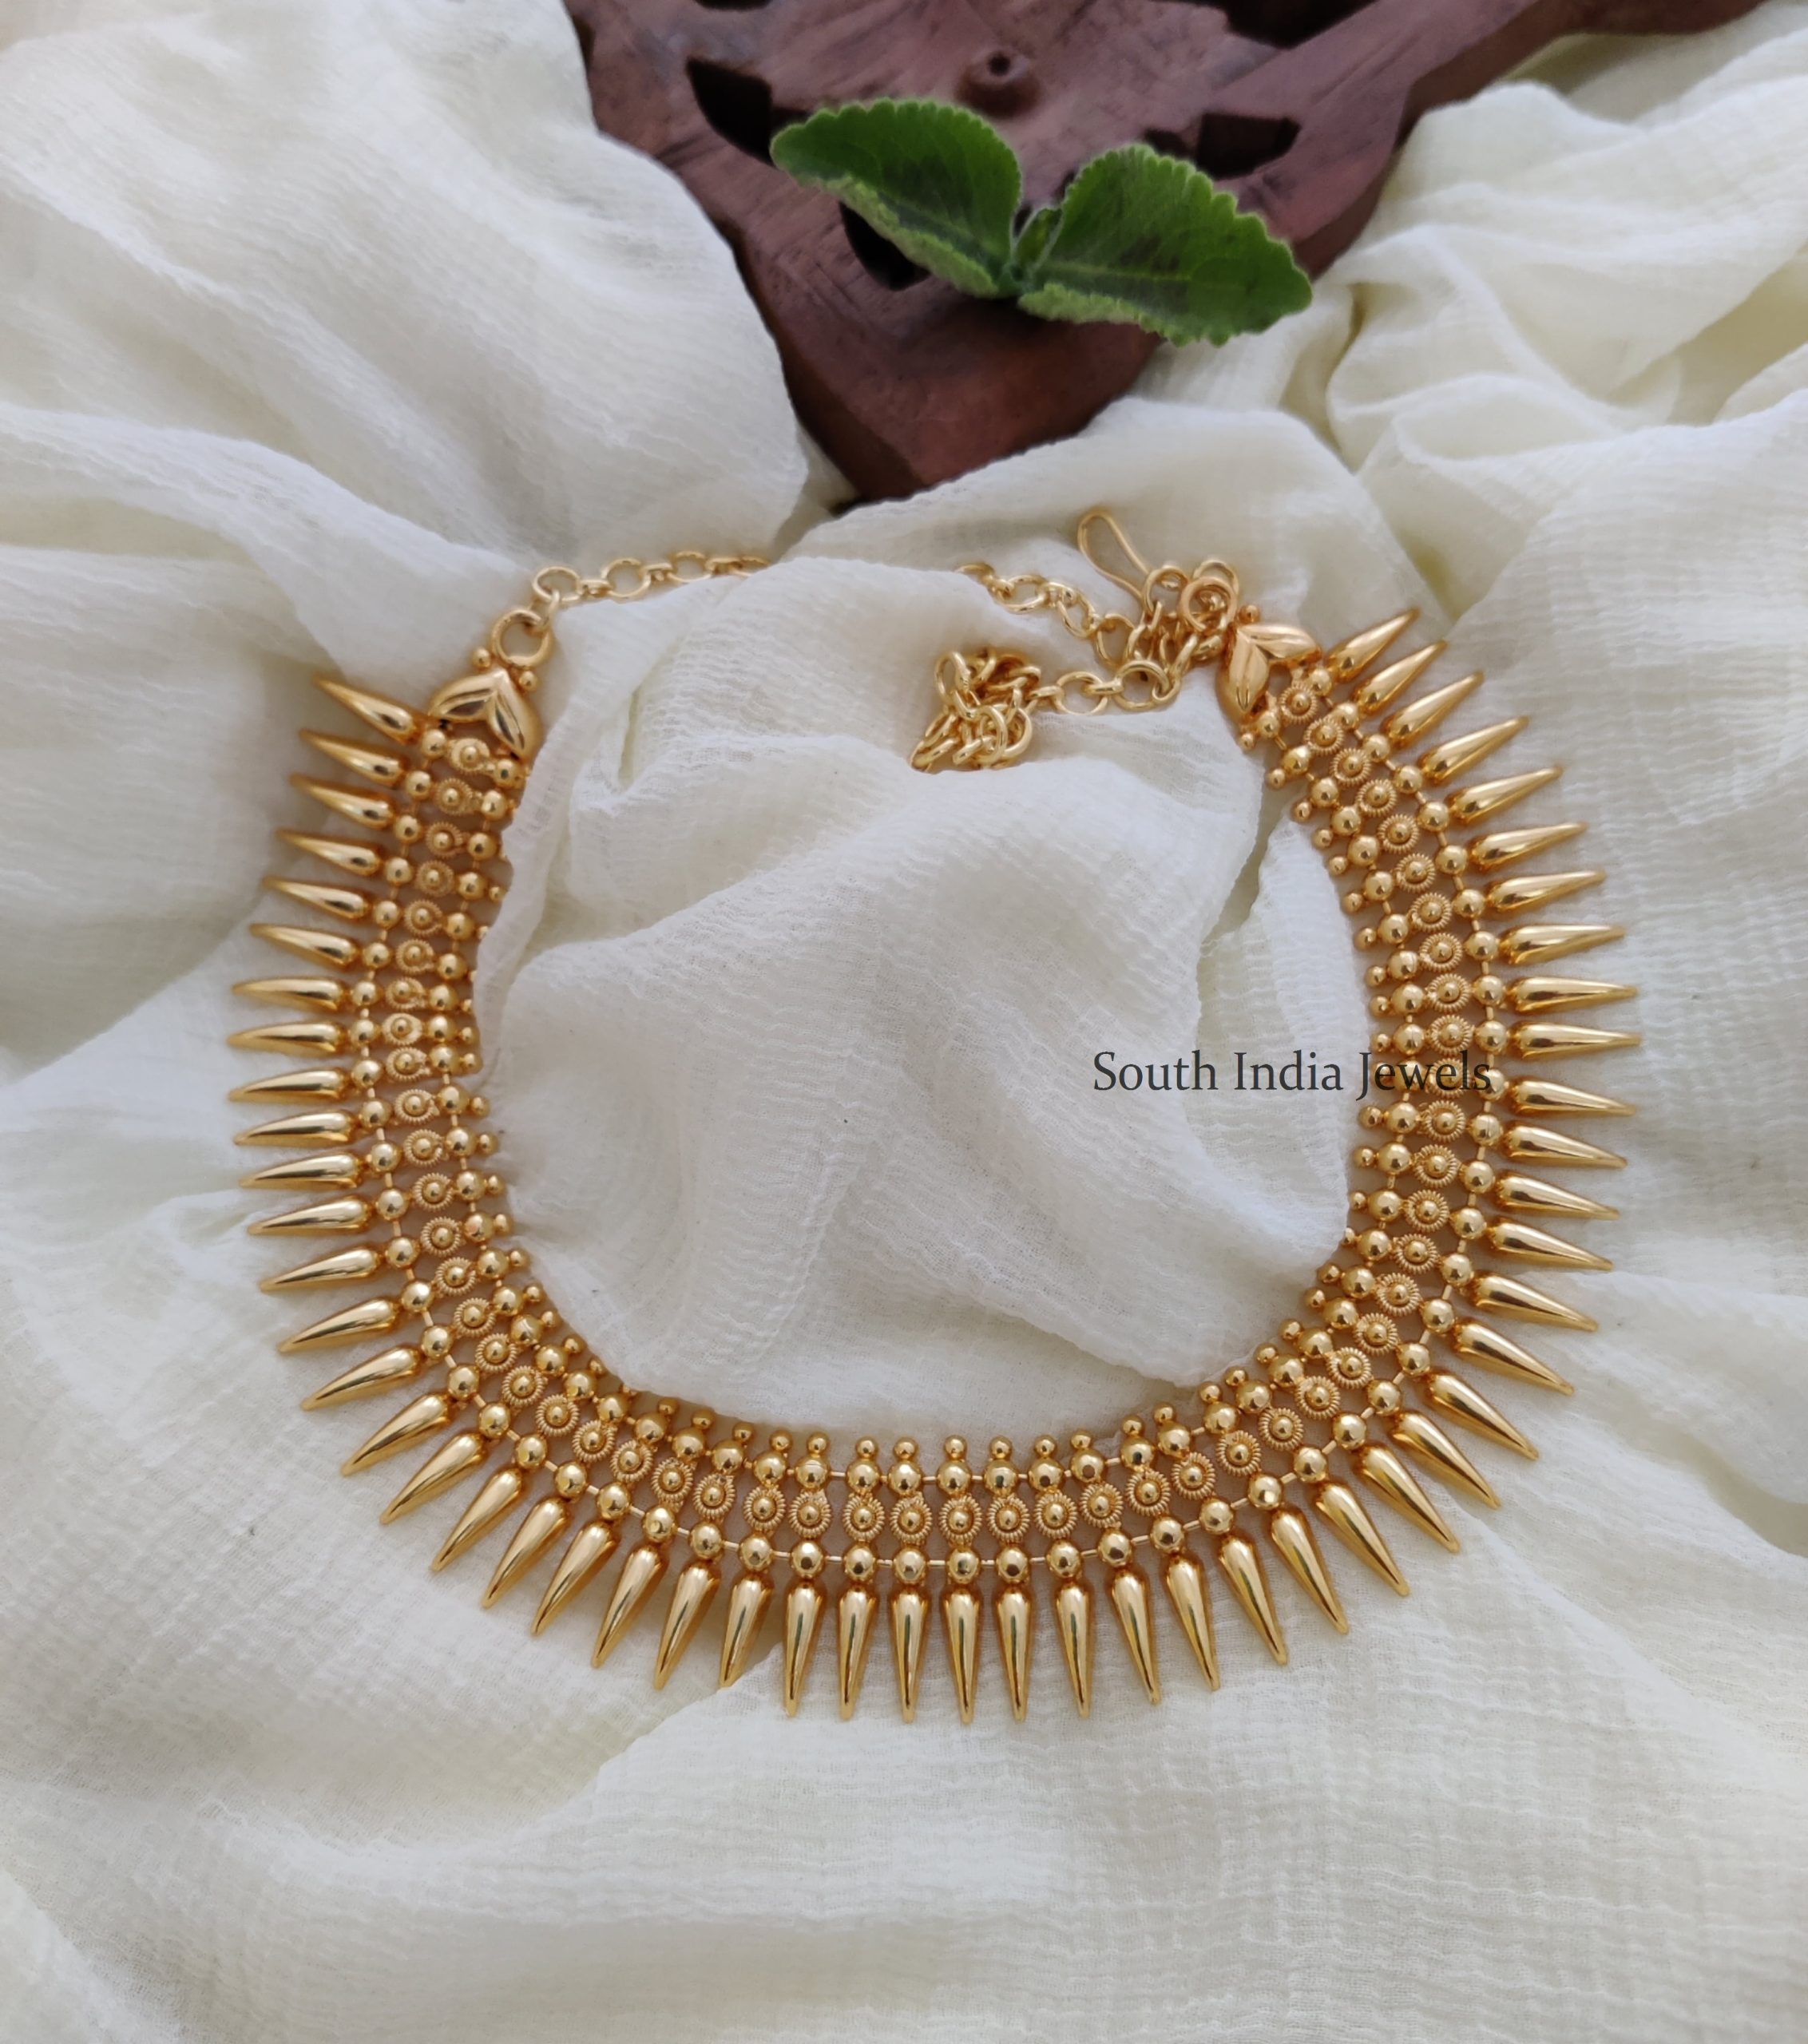 Mullamottu necklace looks very simple and elegant. Necklace - Length 40.64 cms, gold polish.